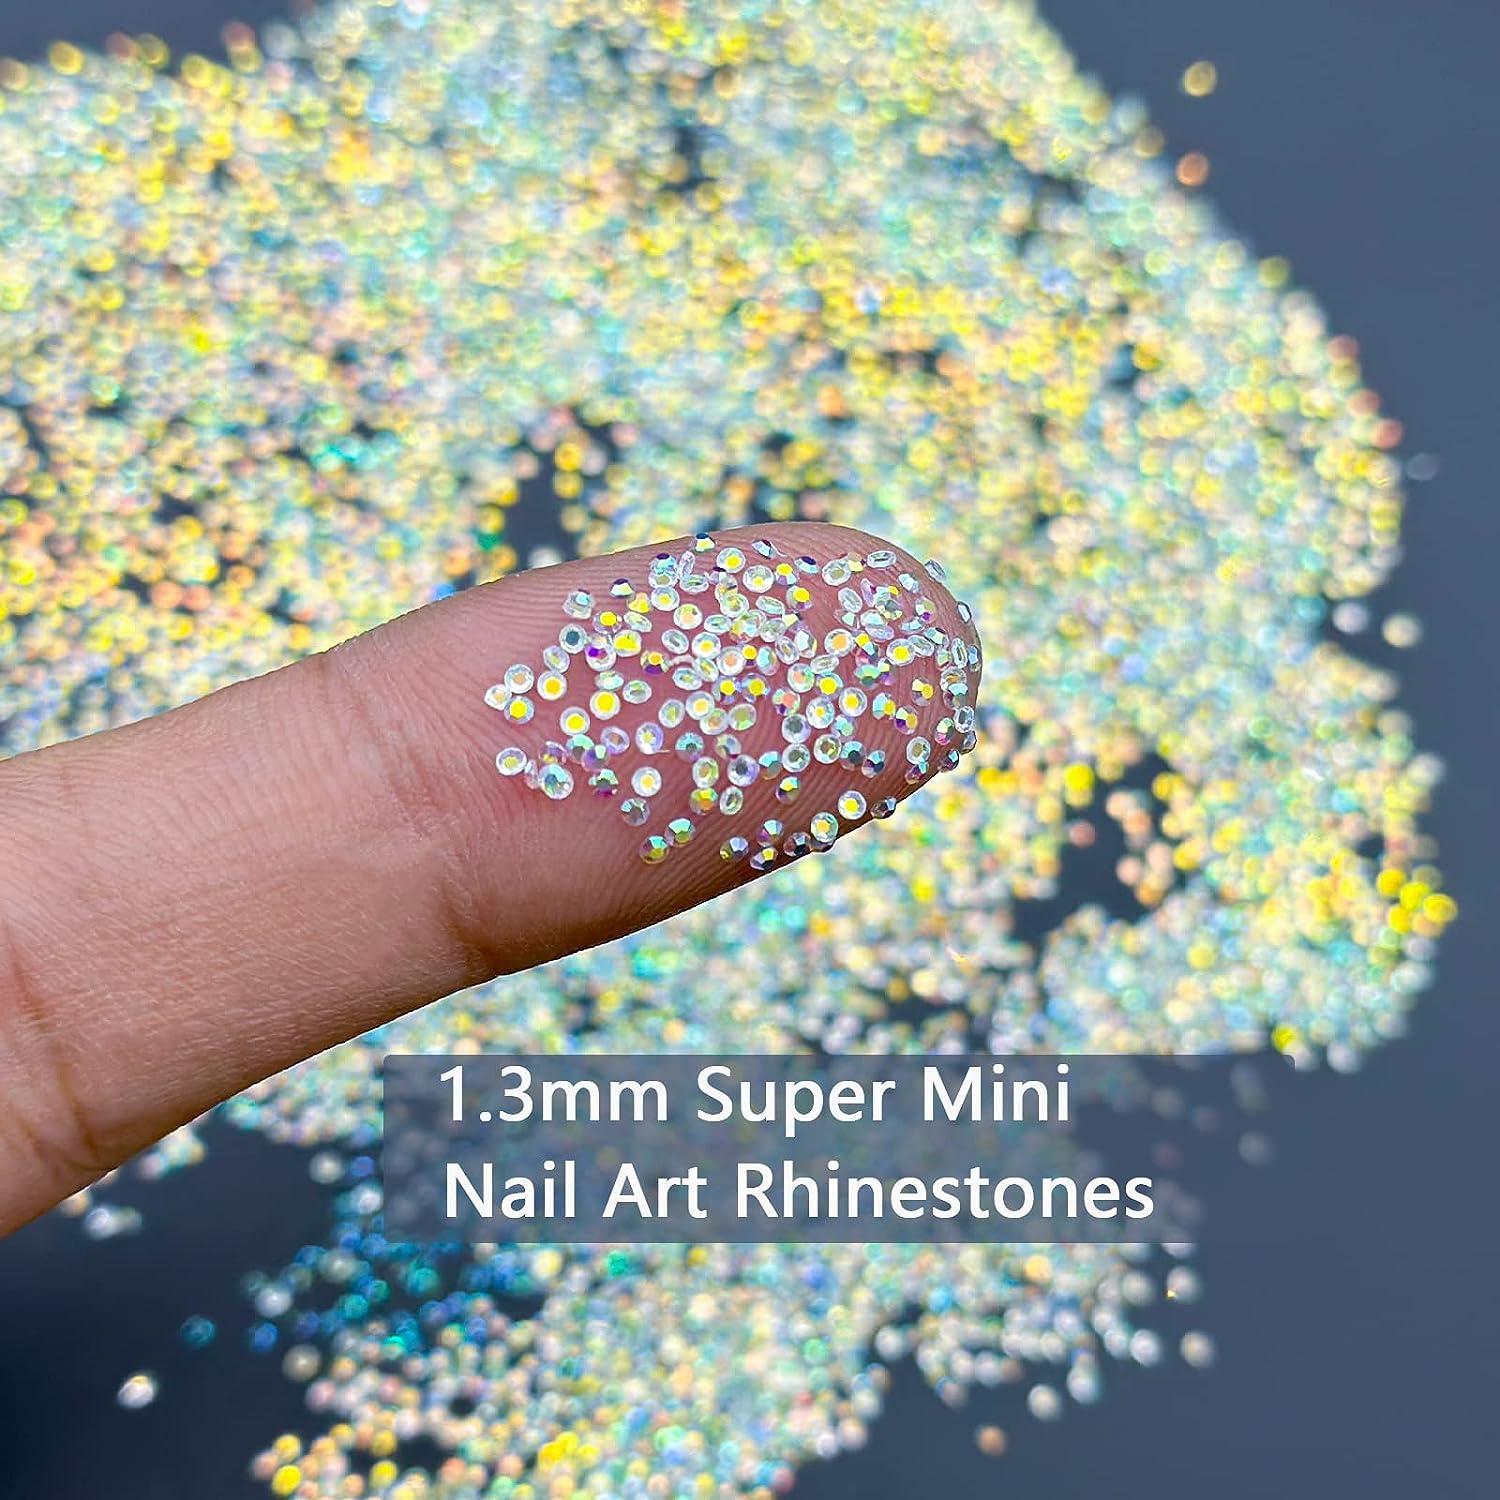 Minejin Nail Art Mini Rhinestones Micro Crystals Sharp Bead Phone Mini Gems DIY Art Decoration Need Glue 1400pcs (AB Color)